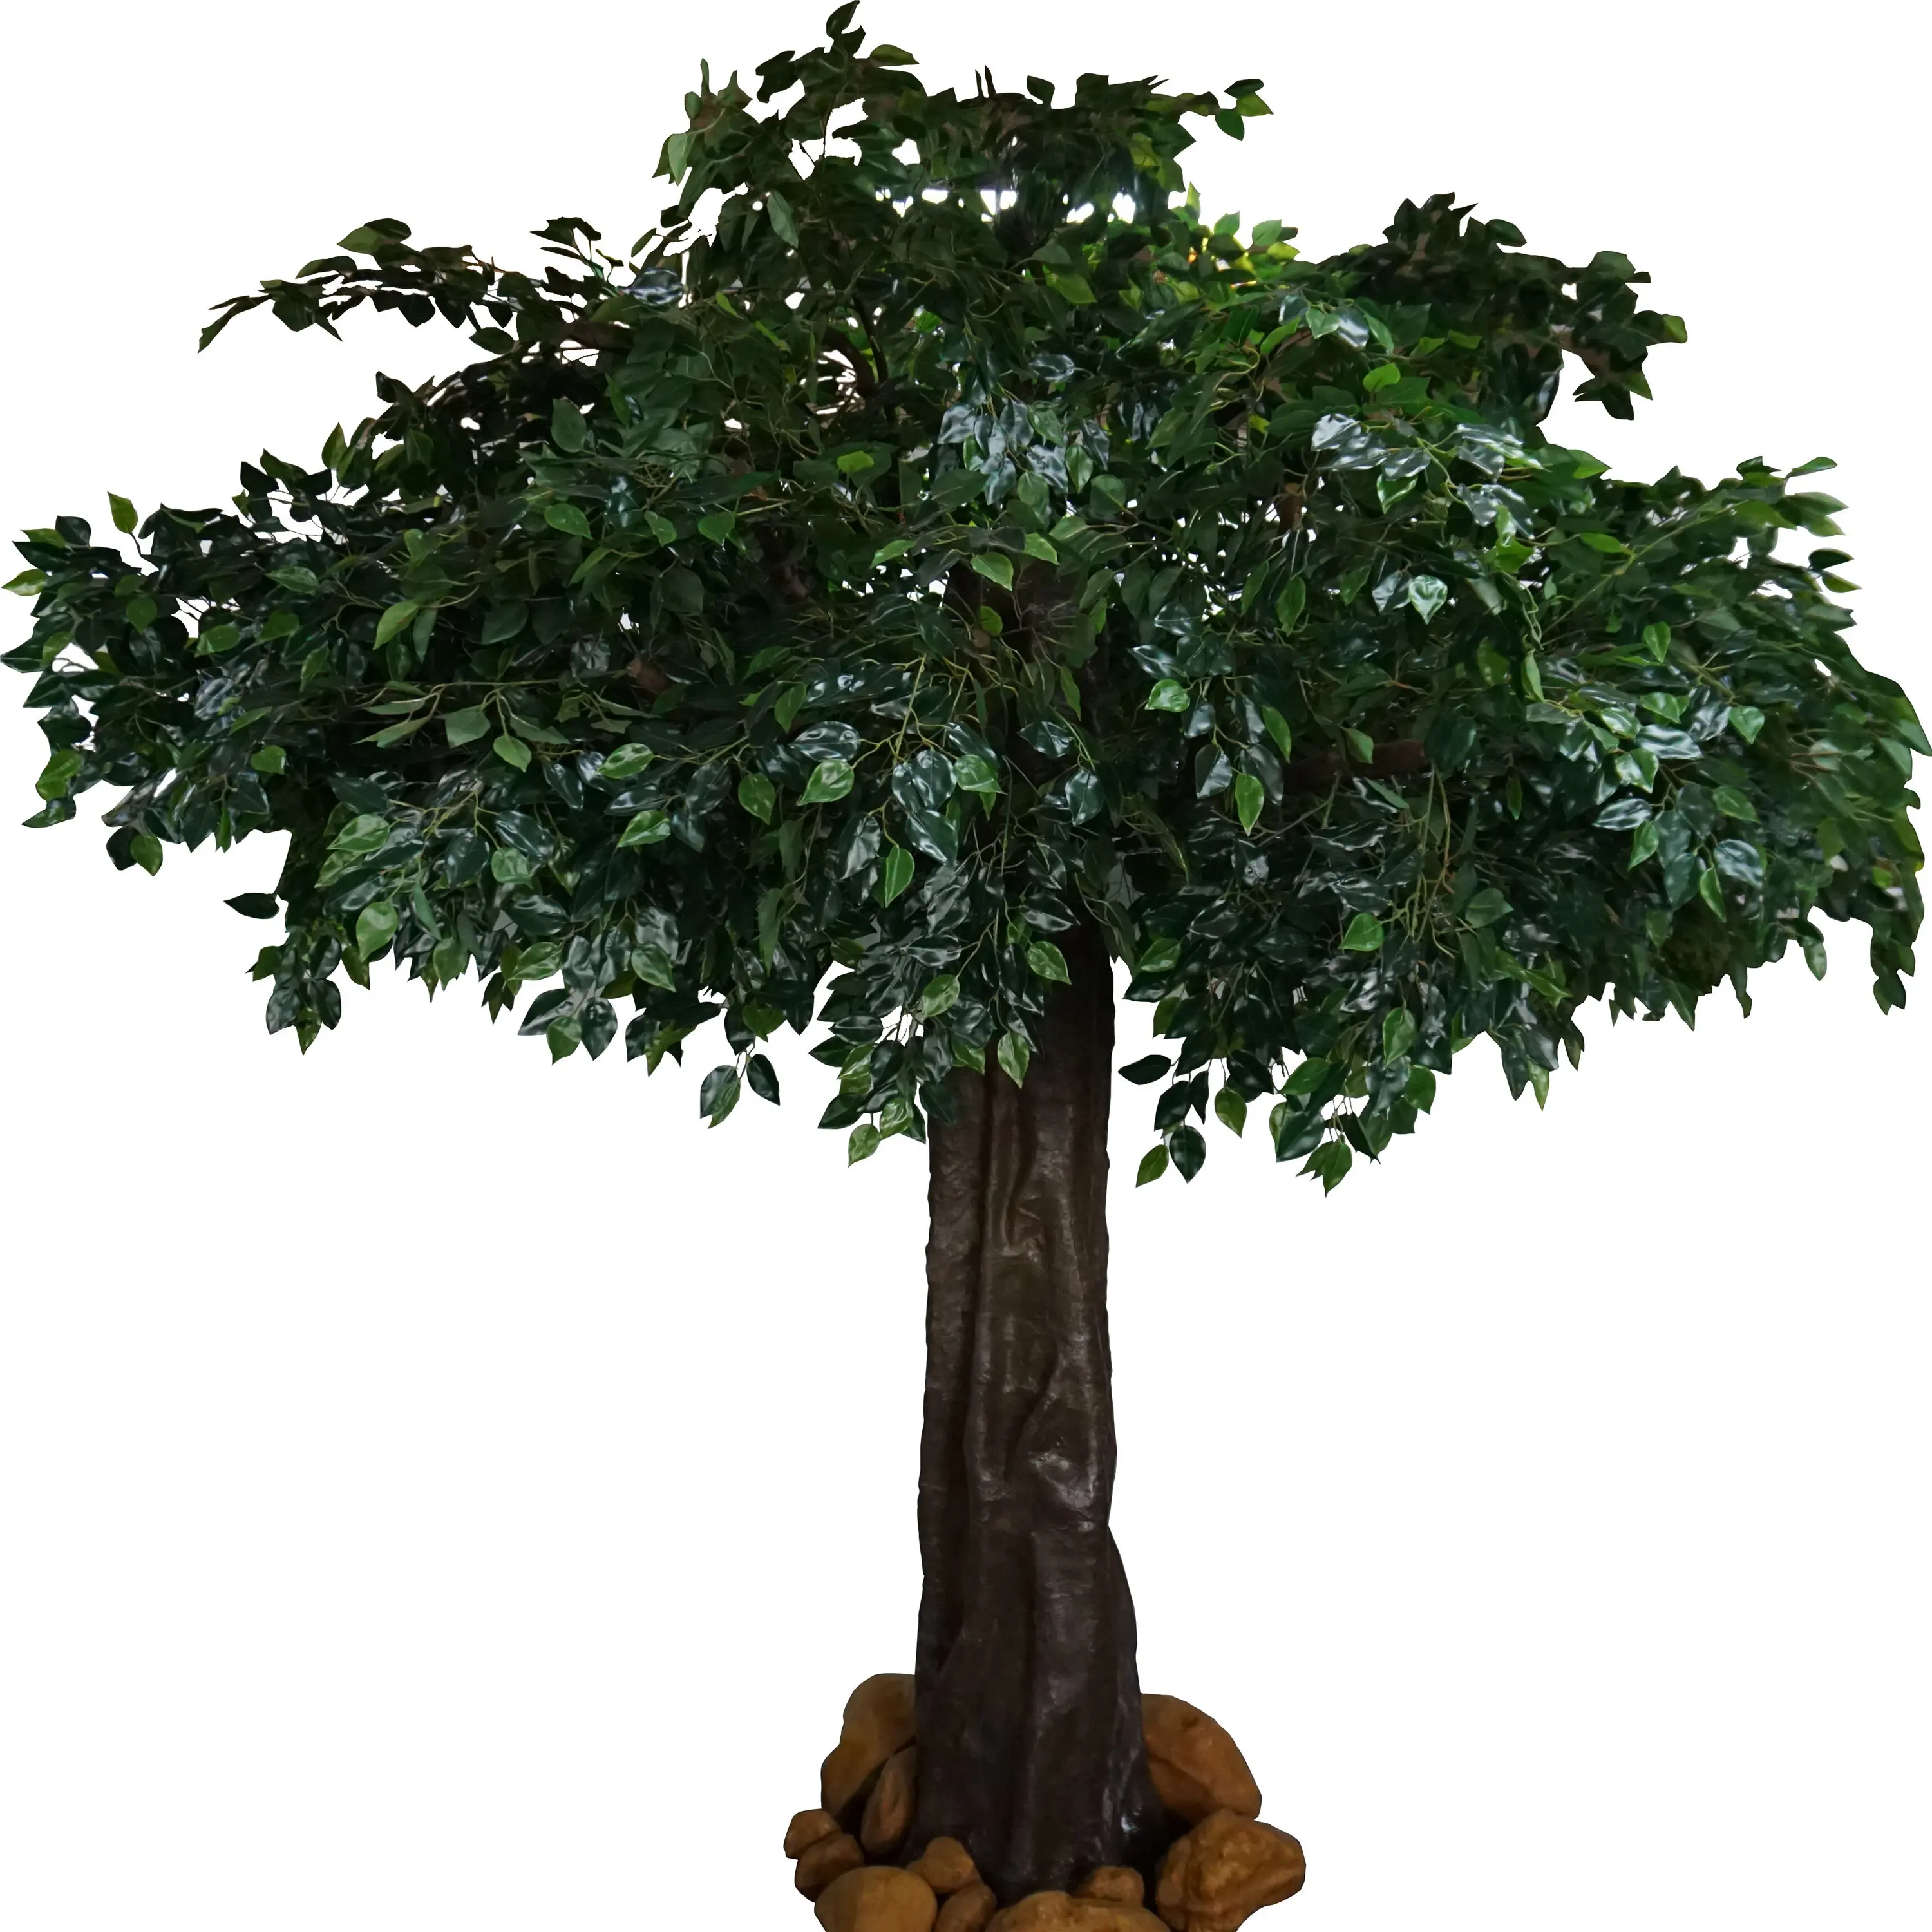 Casamento moda bonsai banyan tree decorativa barato grande figueira artificial com ramos